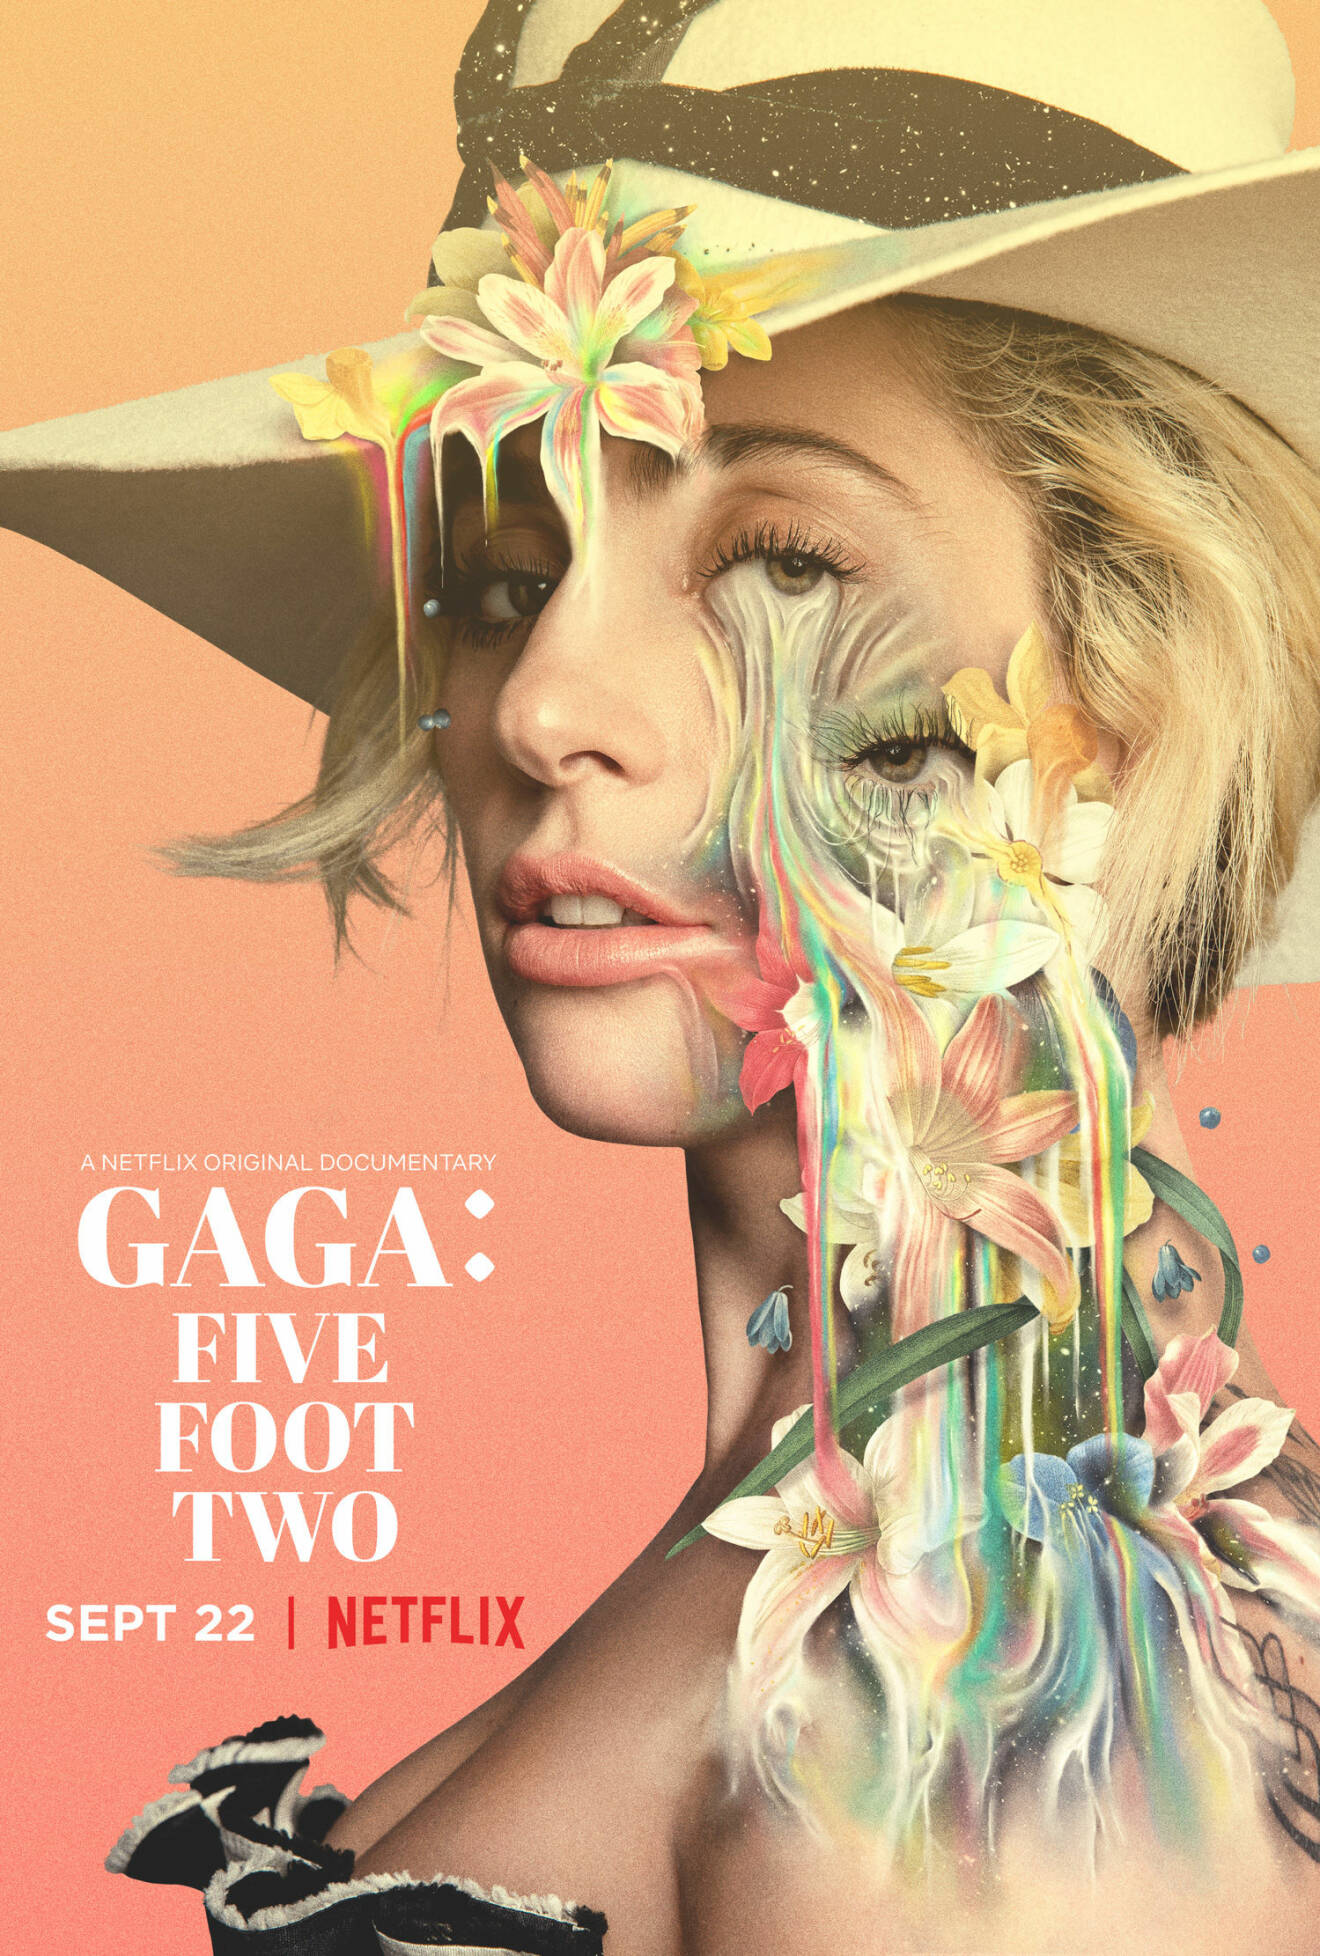 Dokumentären Gaga: Five foot two